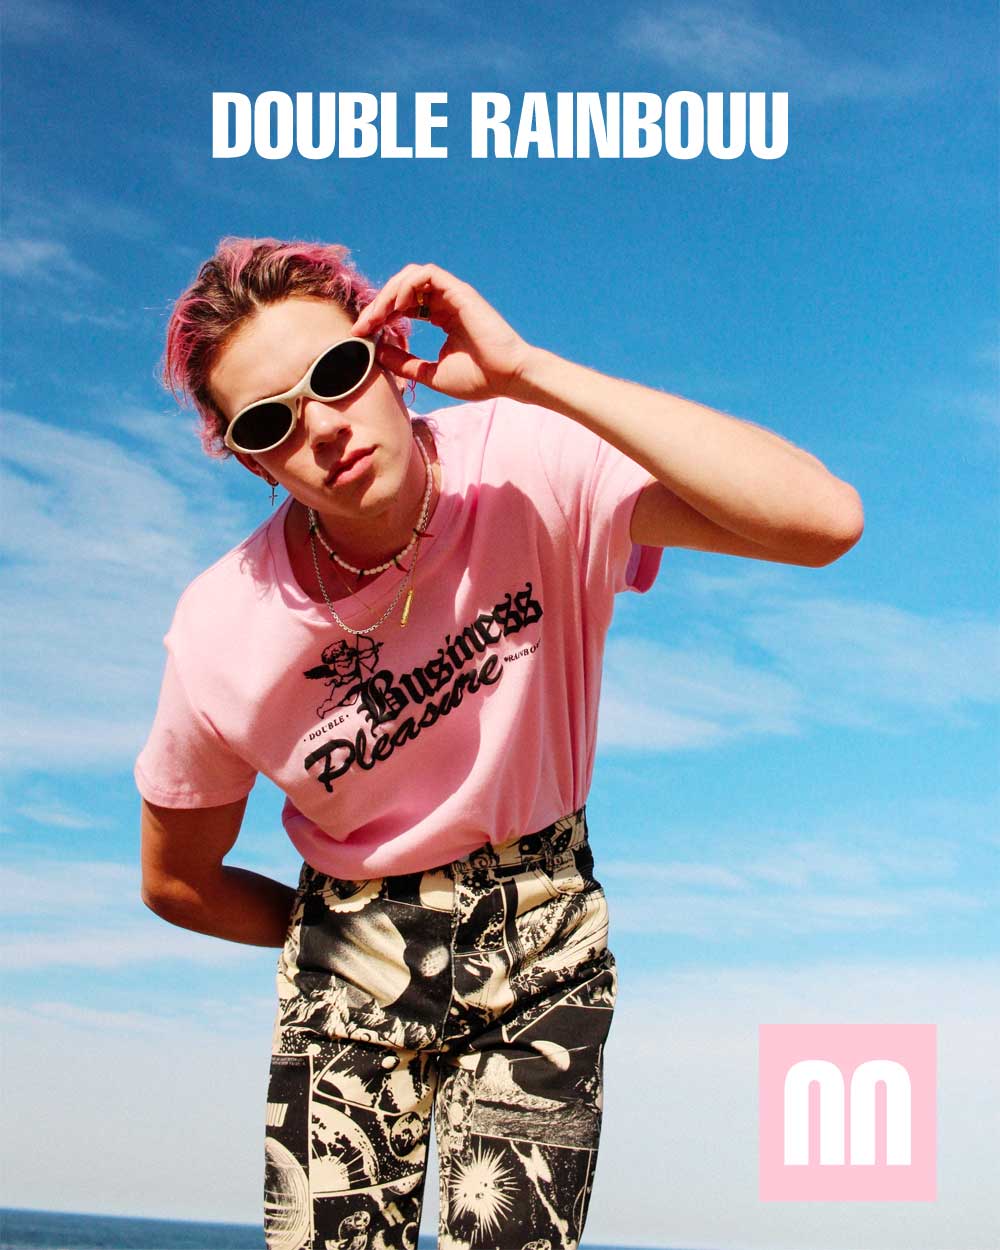 Double Rainbouu Australian Beach Clothing Brand